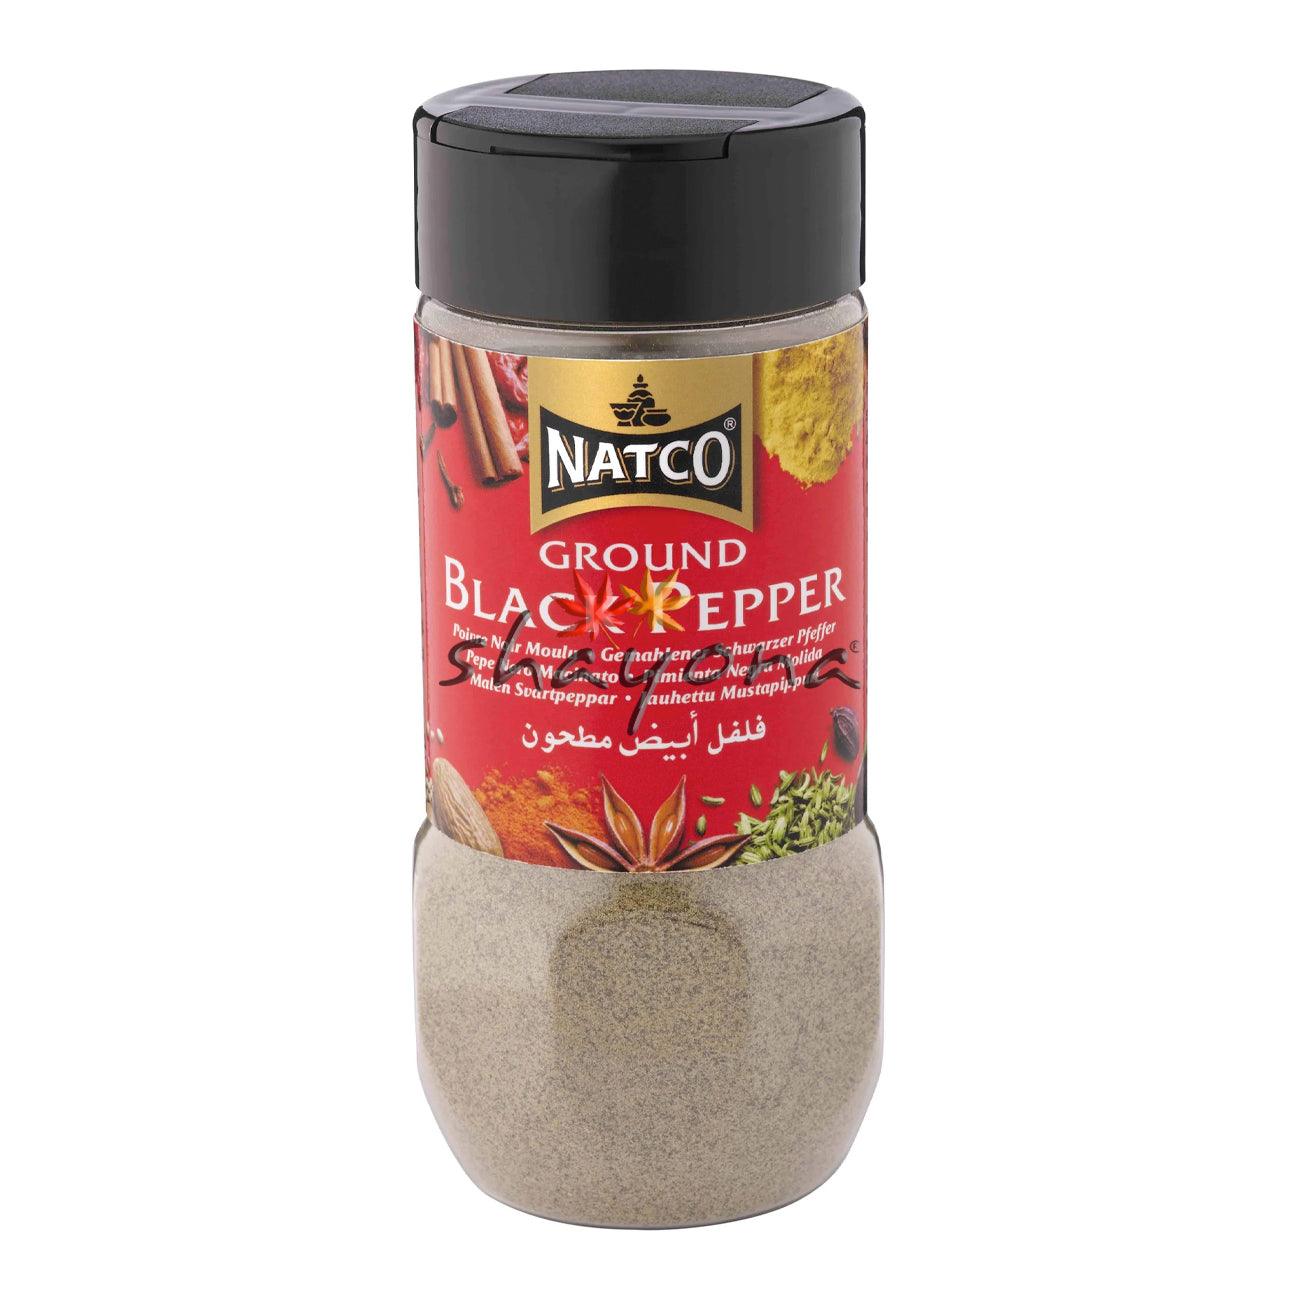 Natco Ground Black Pepper - Shayona UK